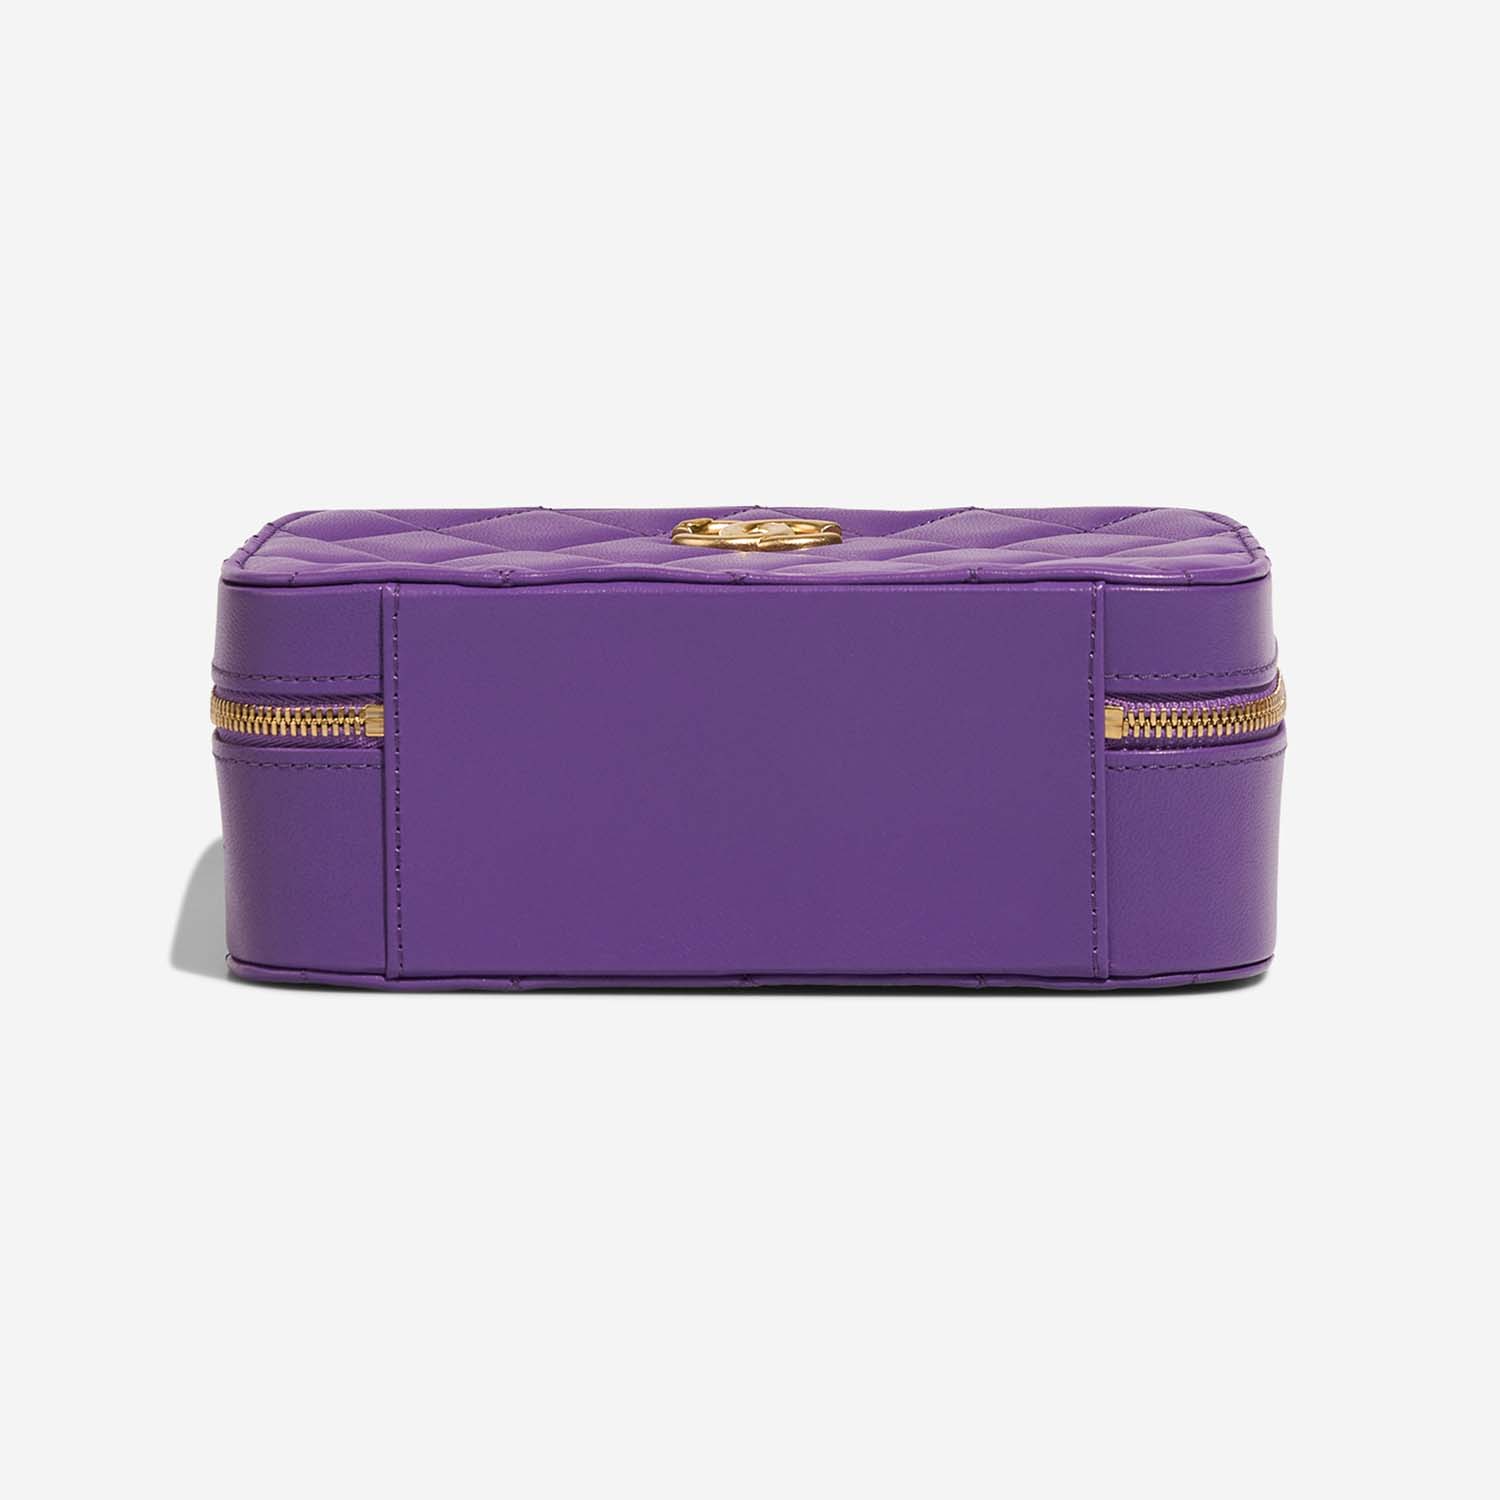 Chanel Vanity Small Violet Bottom  | Sell your designer bag on Saclab.com